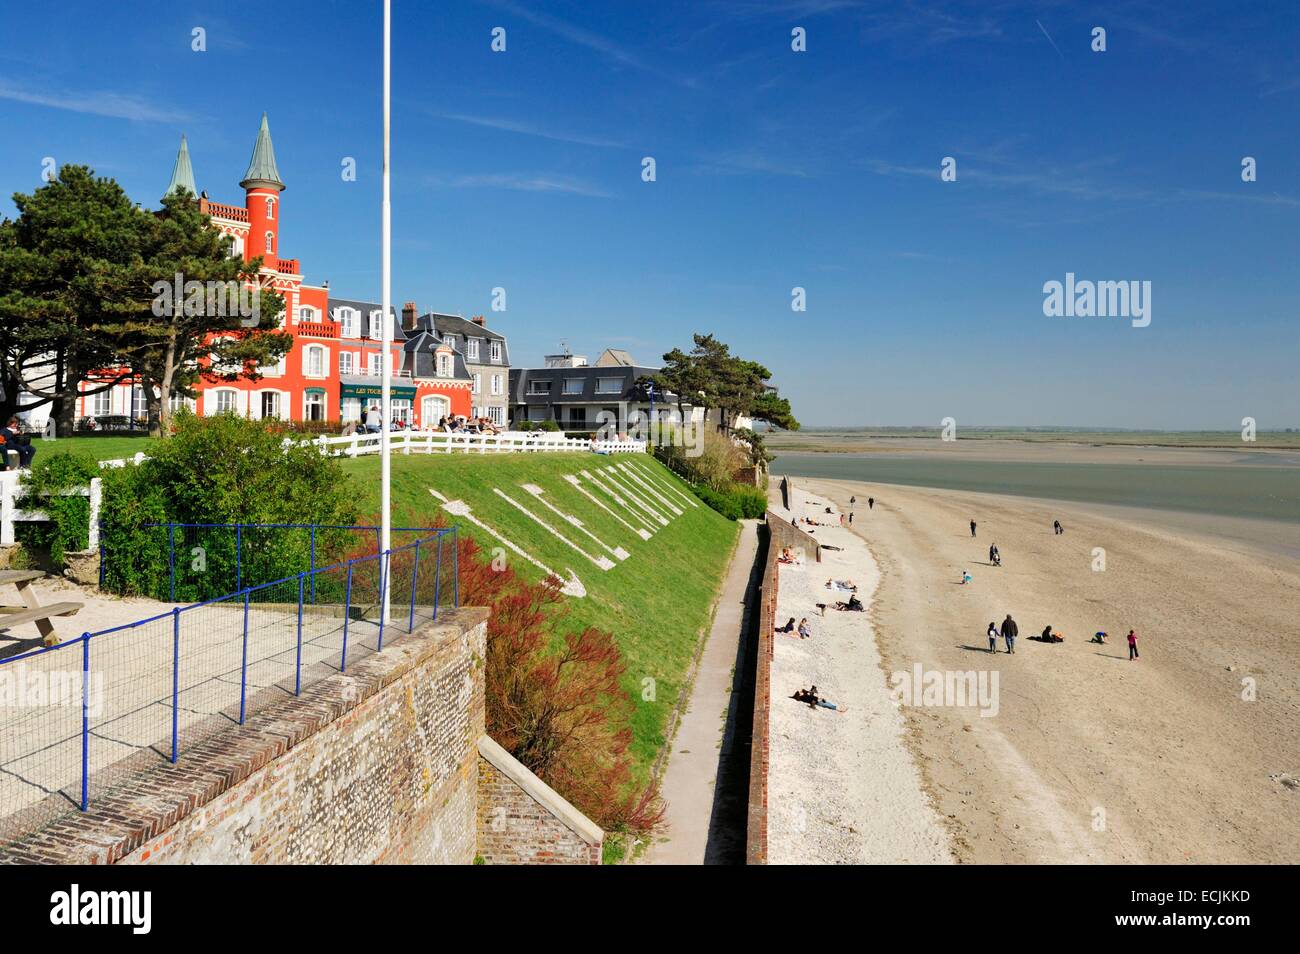 France, Somme, Le Crotoy, hotel restaurant Les Tourelles at beachside Stock Photo